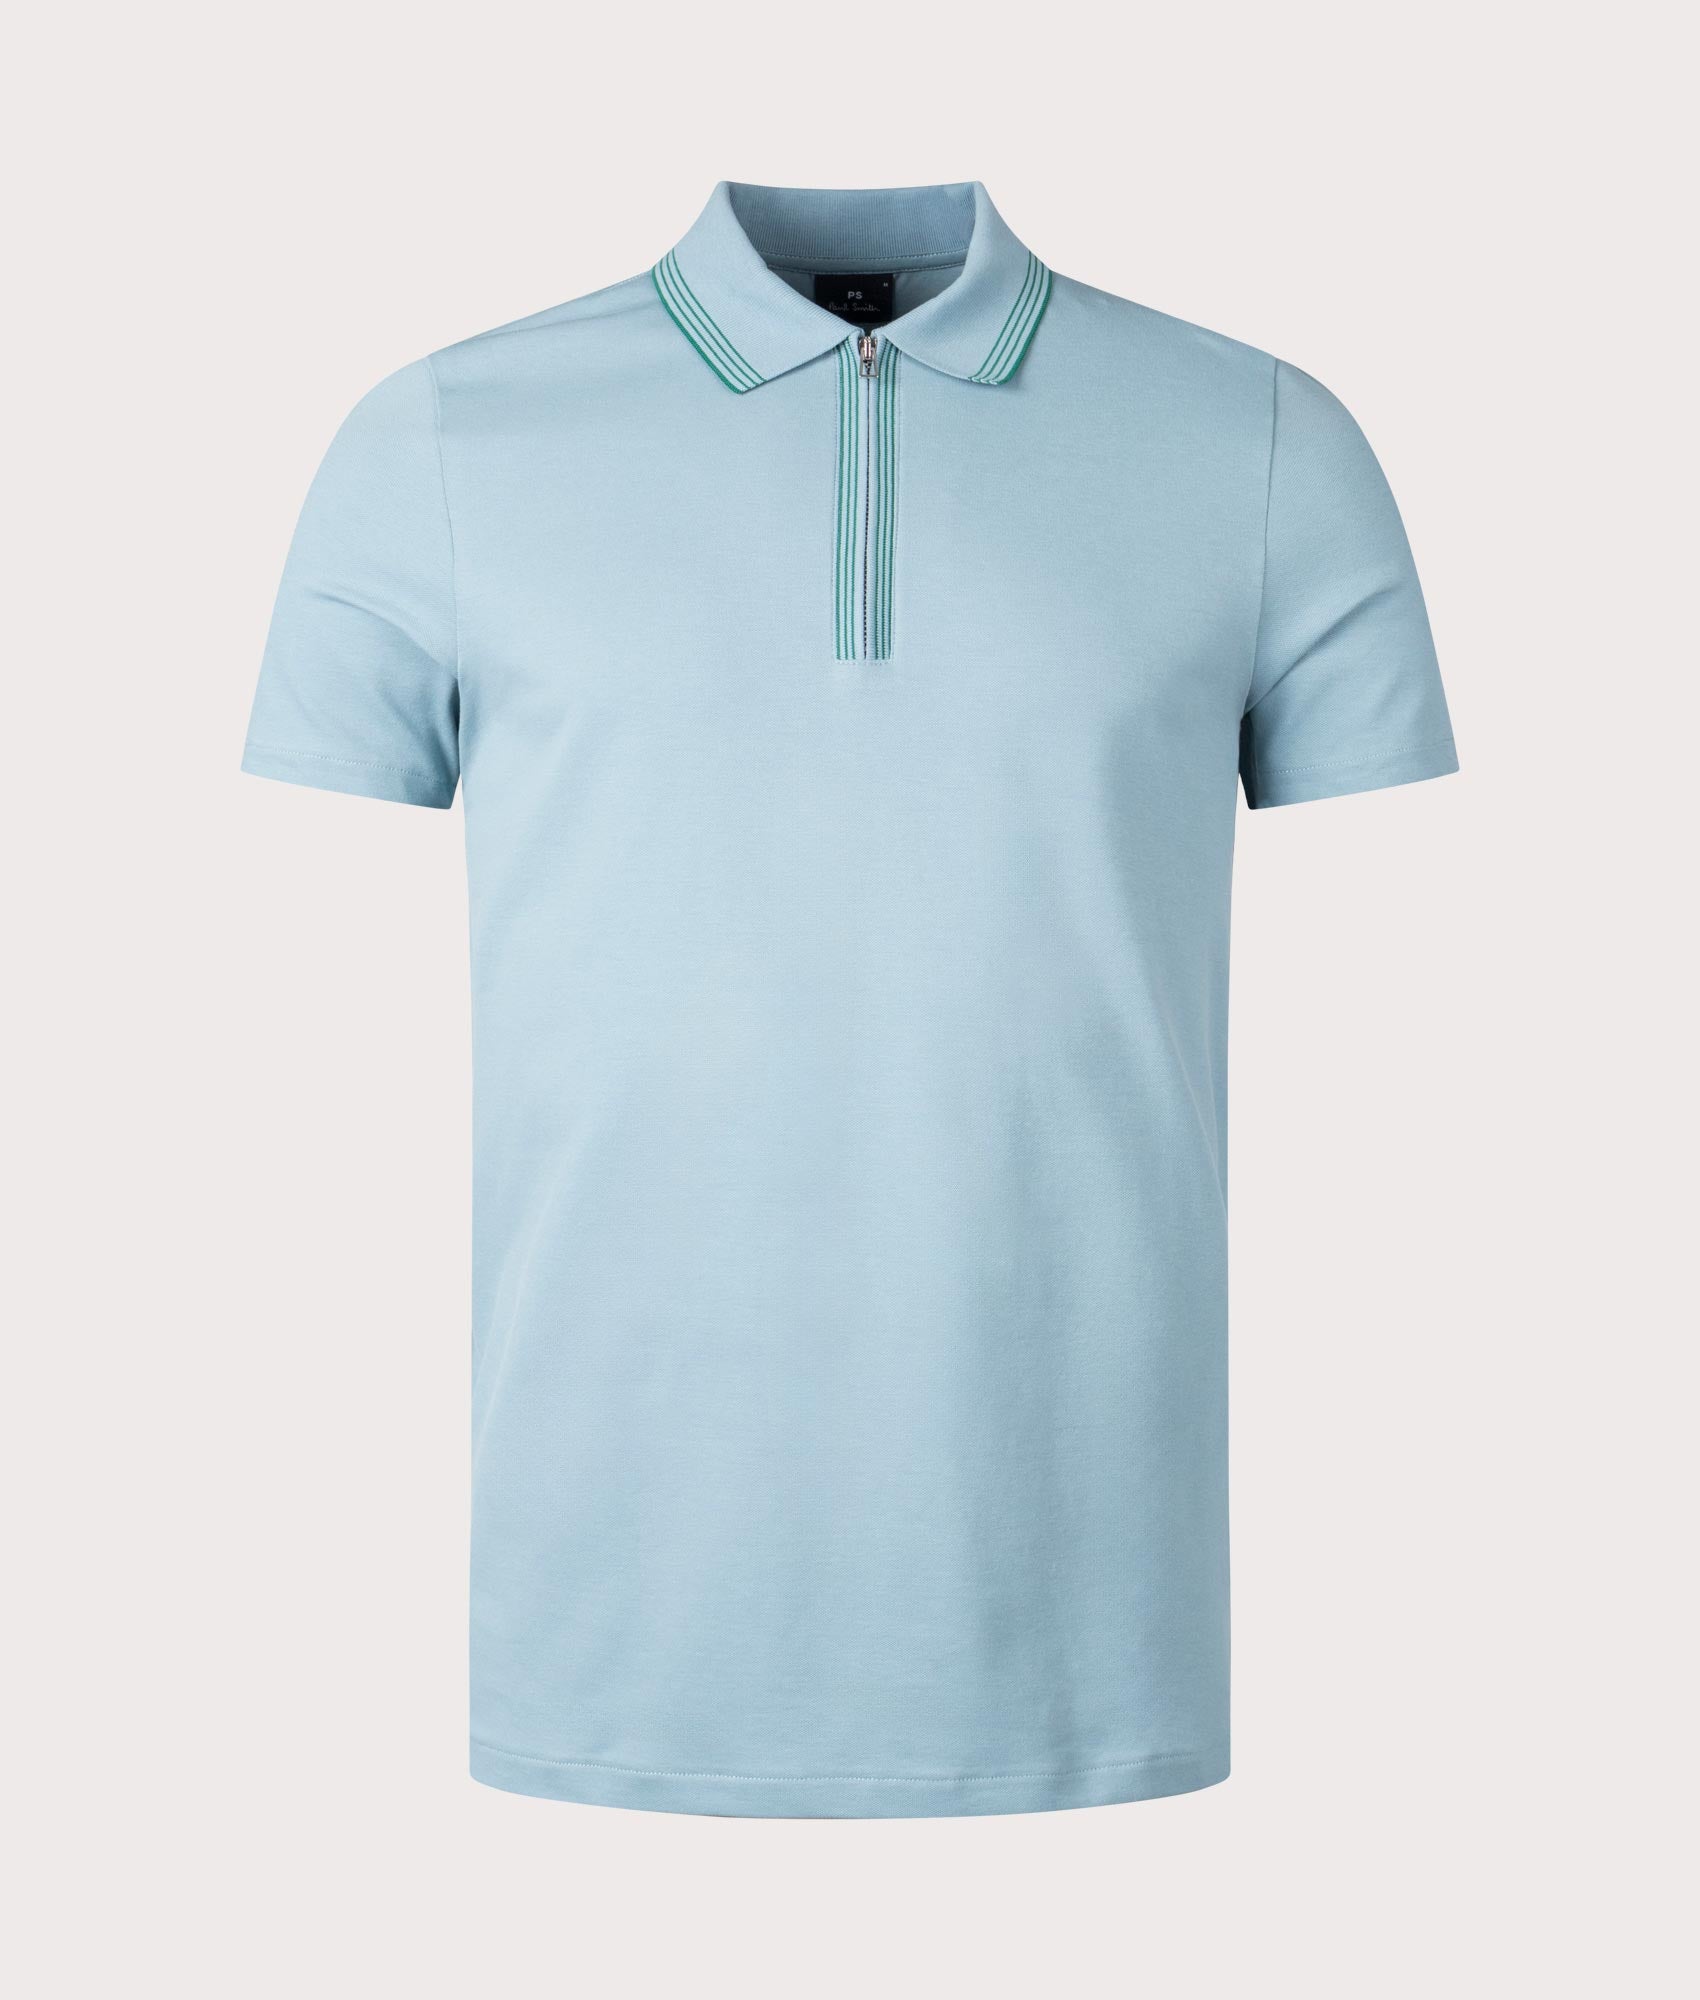 PS Paul Smith Mens Zip Neck Polo Shirt - Colour: 41A Cobalt Blue - Size: Medium